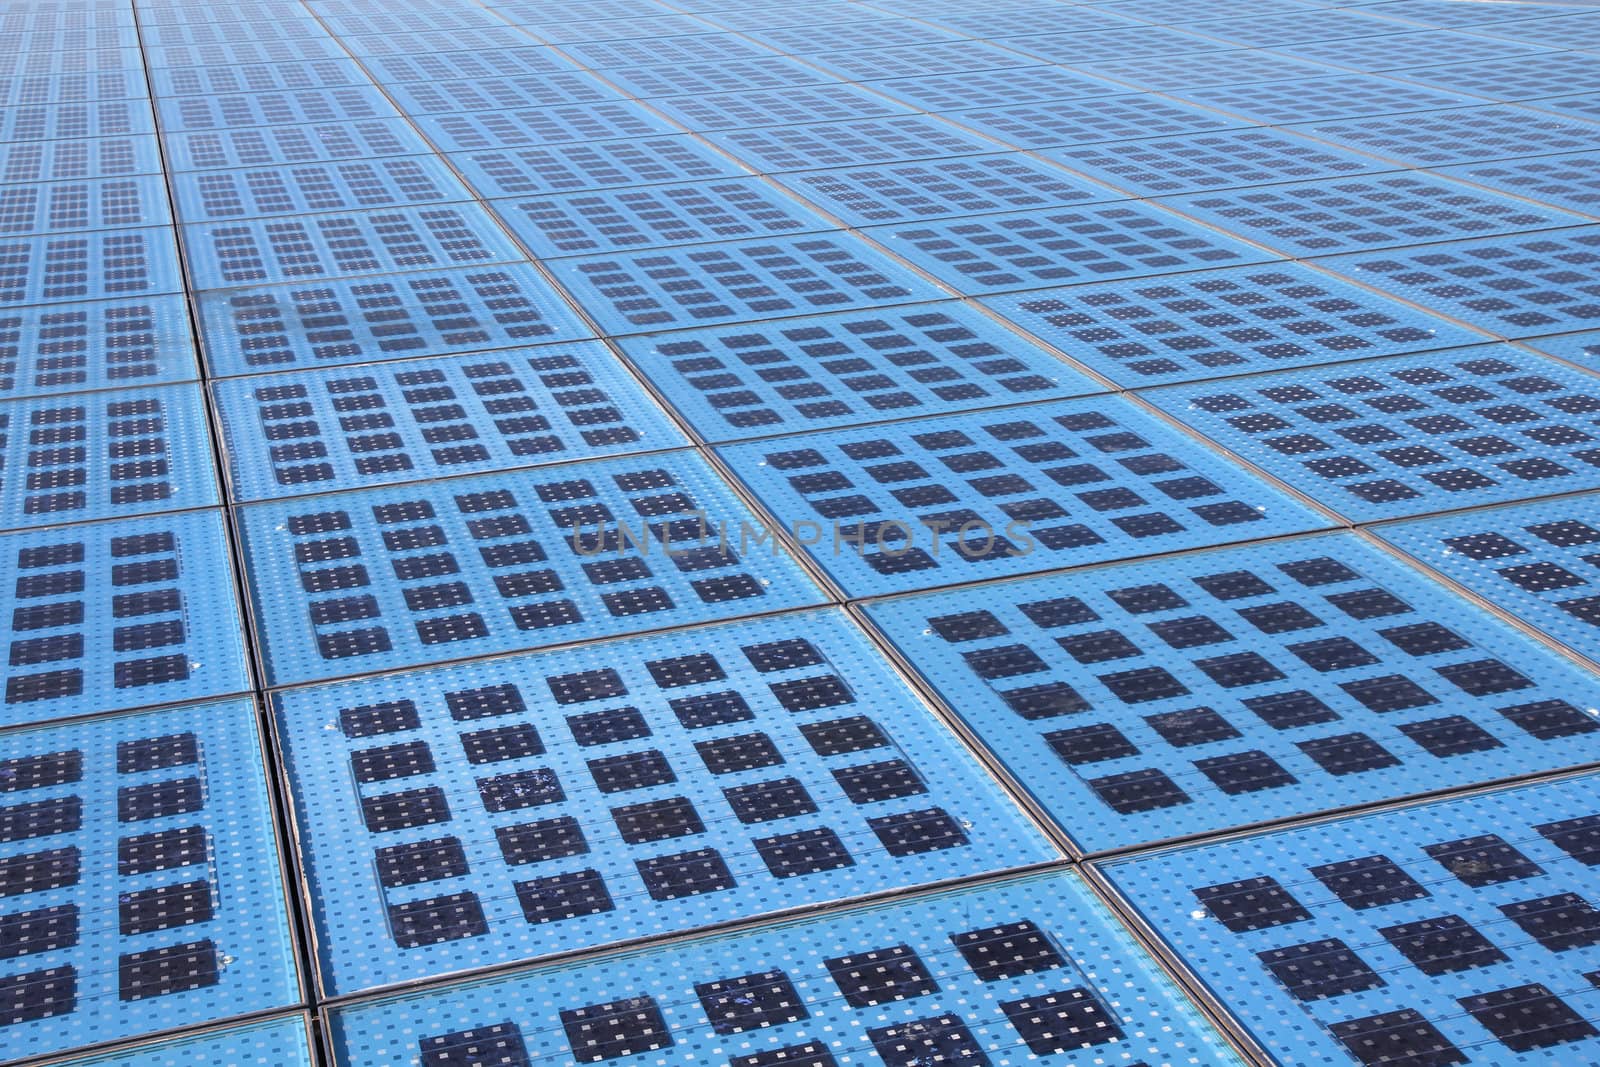 Solar panels array in Croatia - Zadar in Dalmatia.